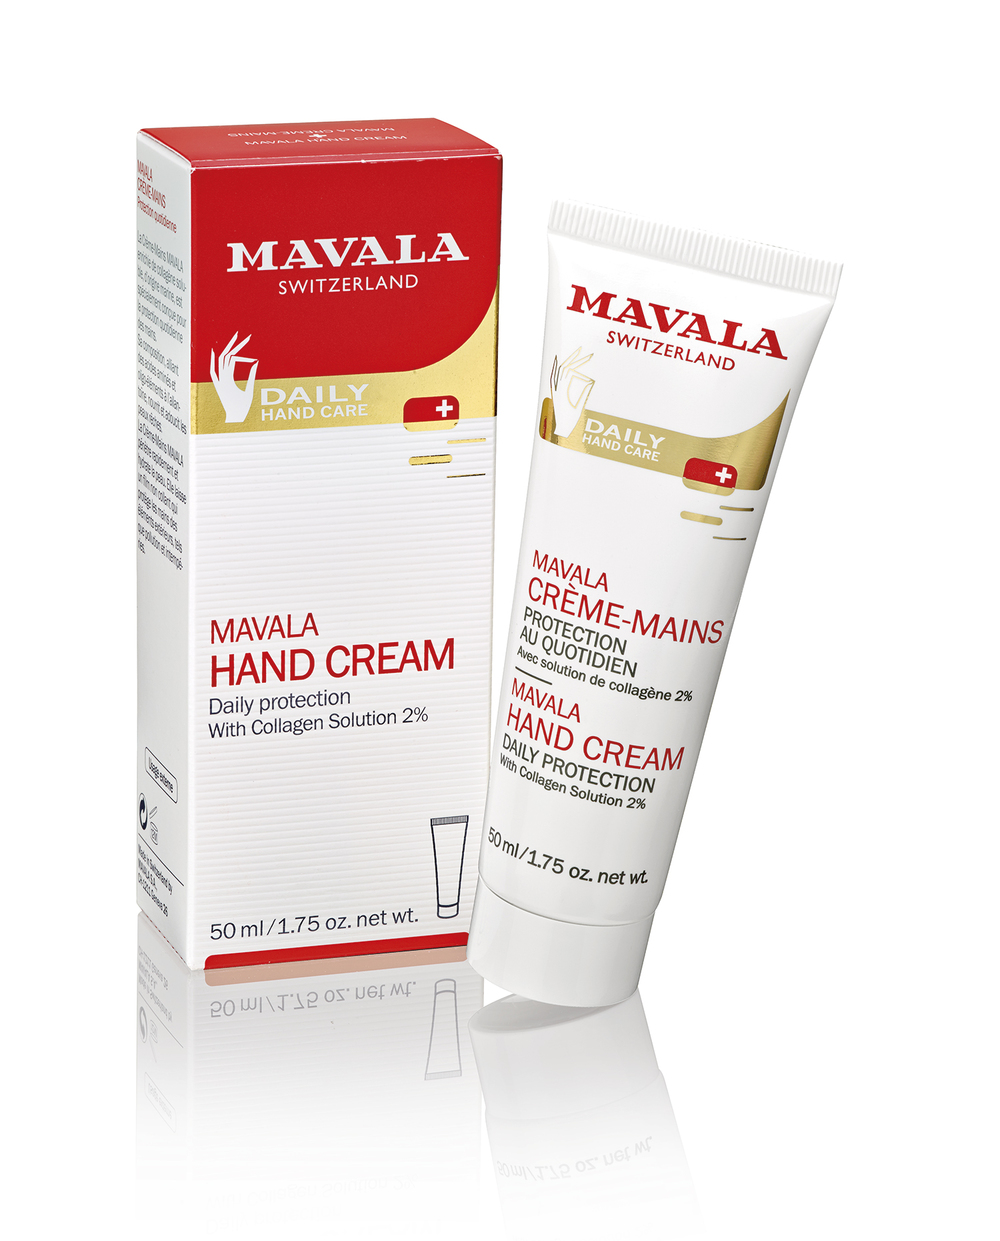 Mavala-hand-cream.jpg